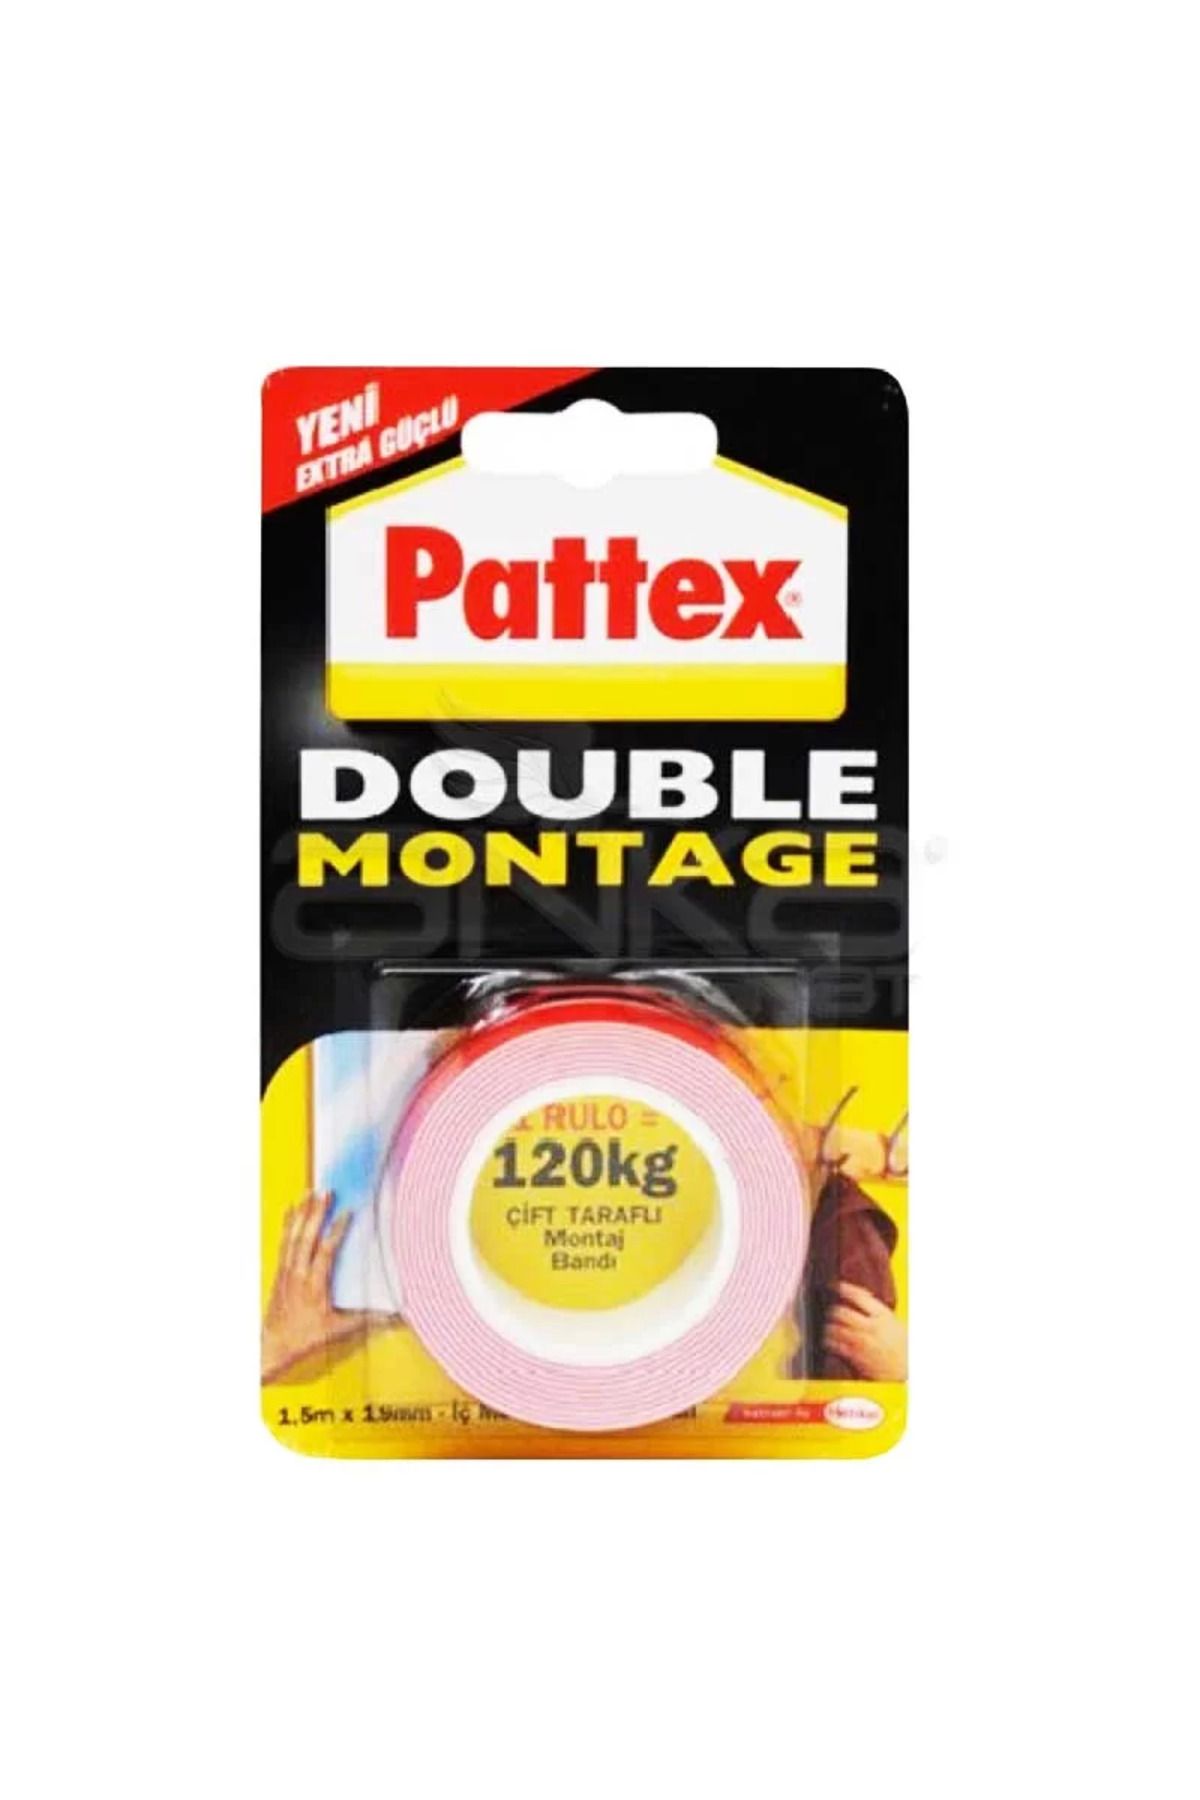 Pattex Double Montage Çift Taraflı Montaj Bandı 1.5m x 19mm